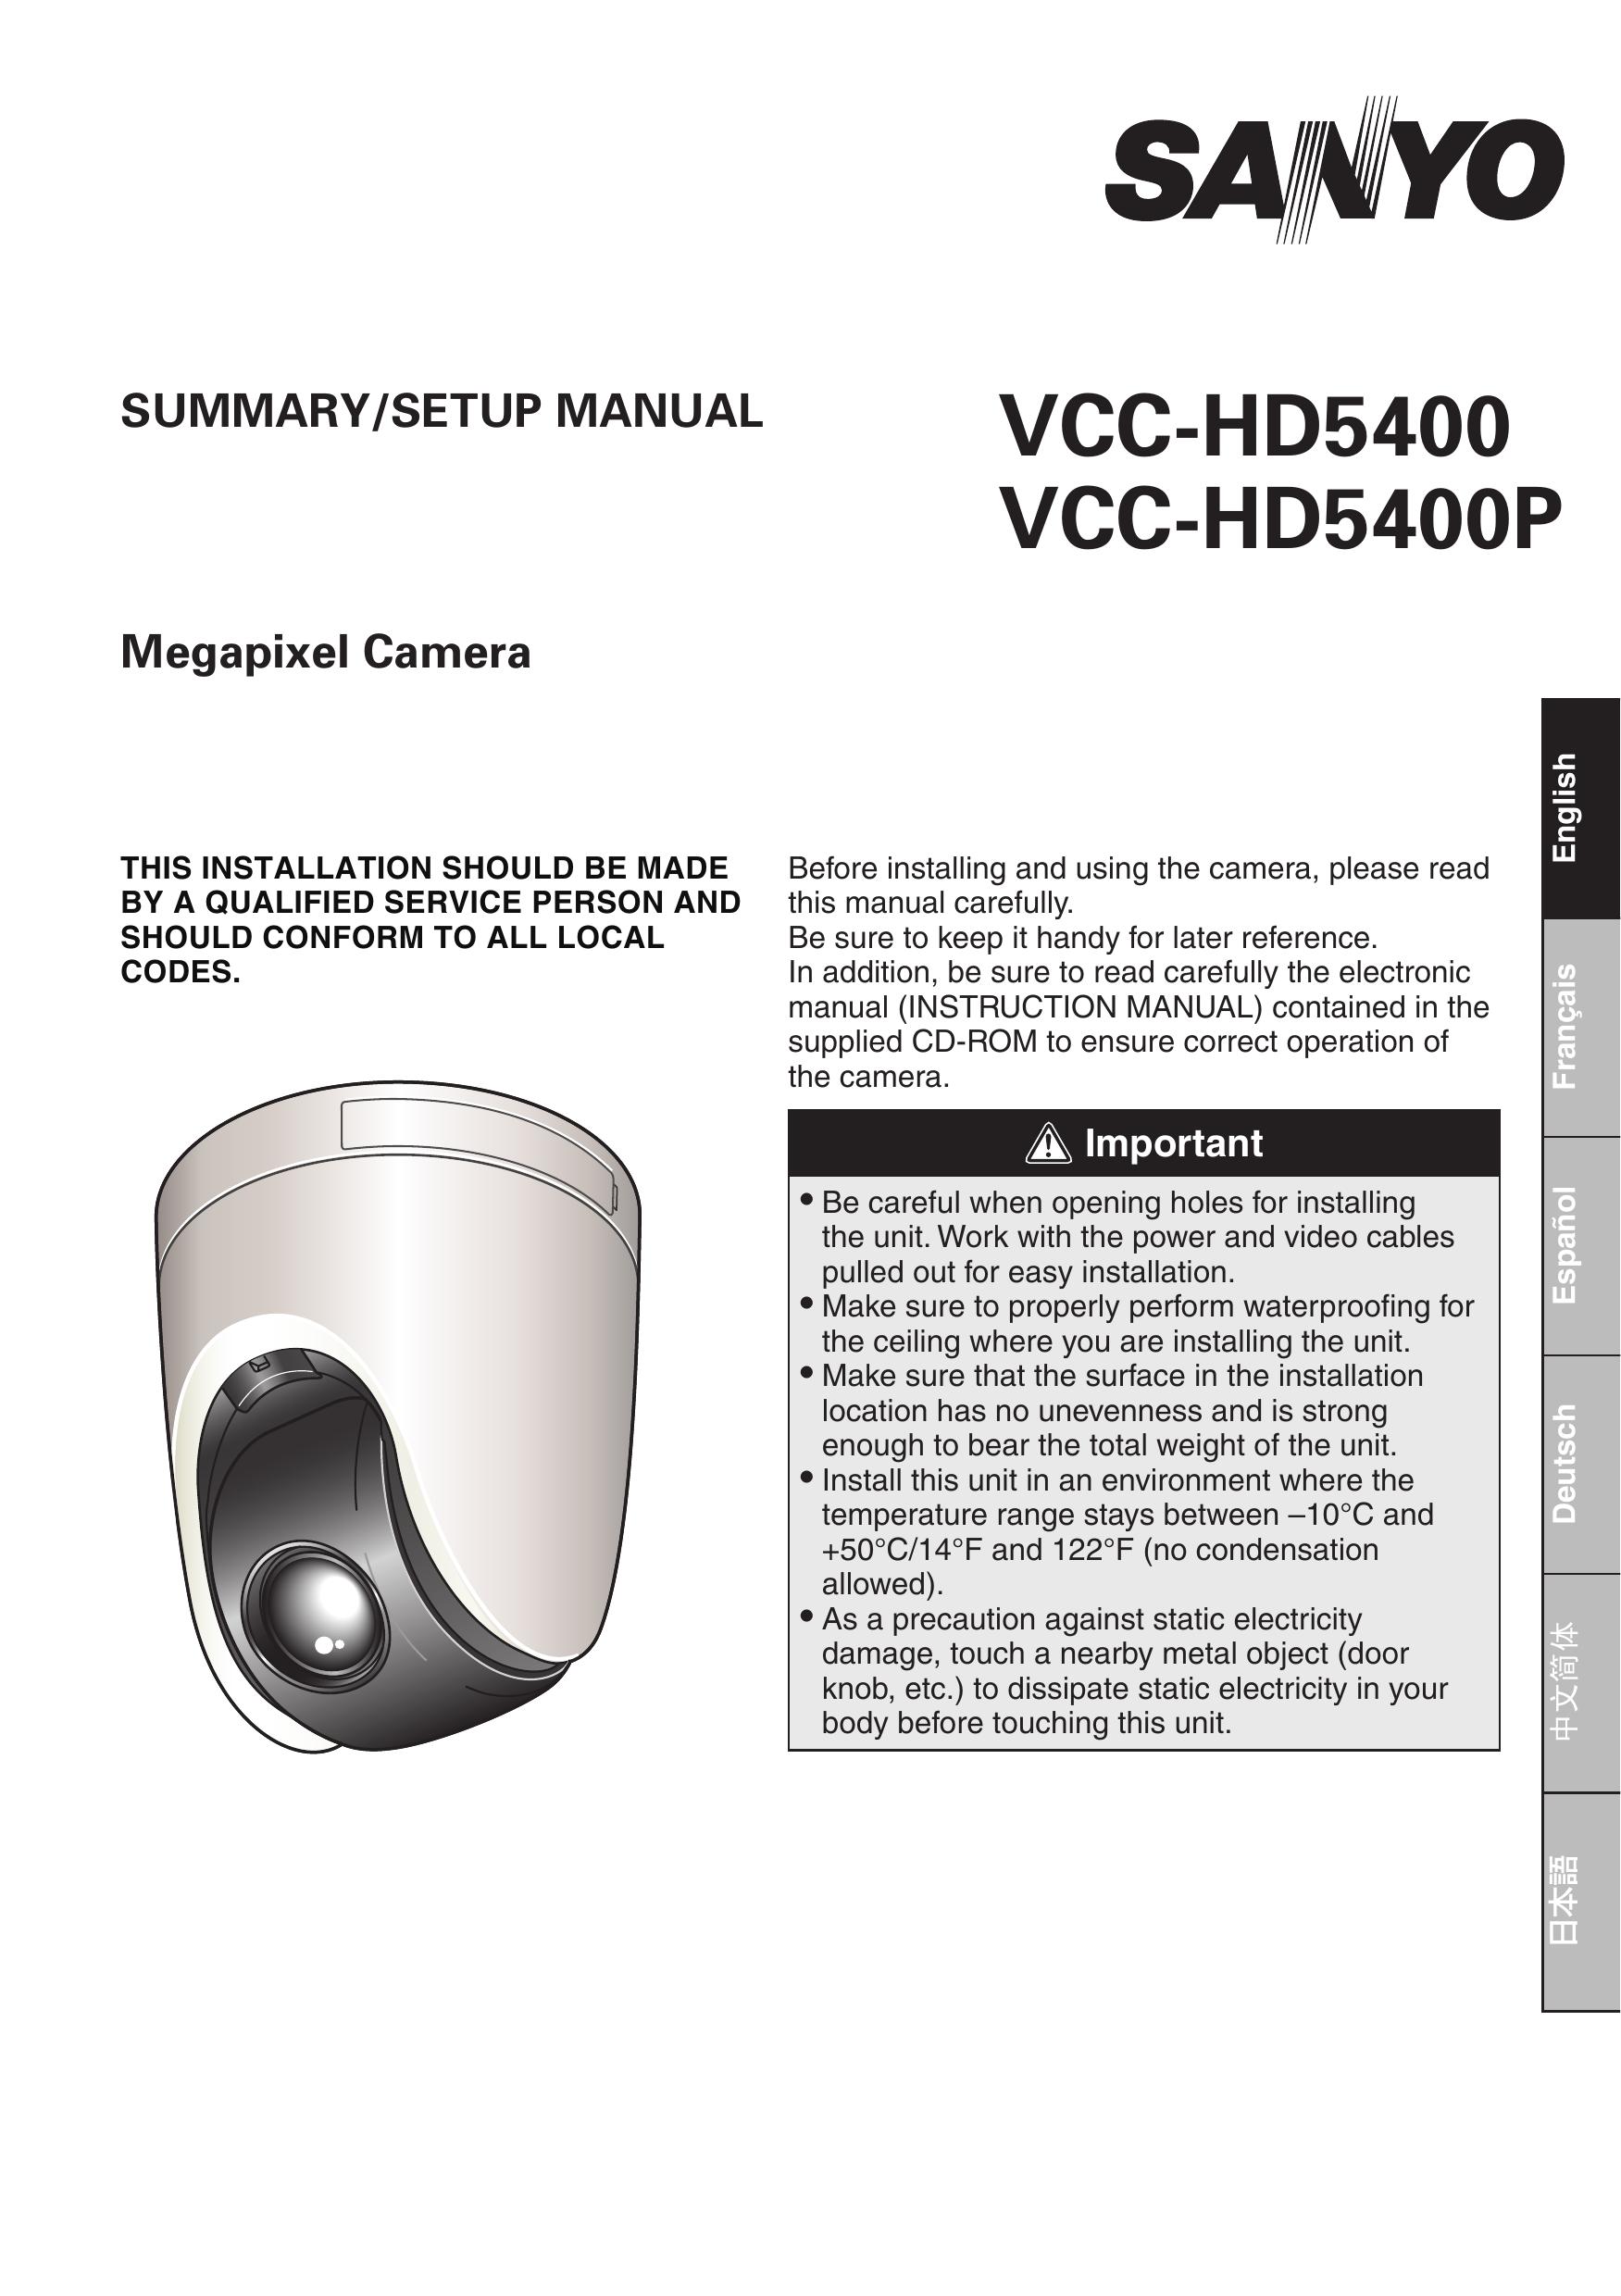 Sanyo VCC-HD5400 Digital Camera User Manual